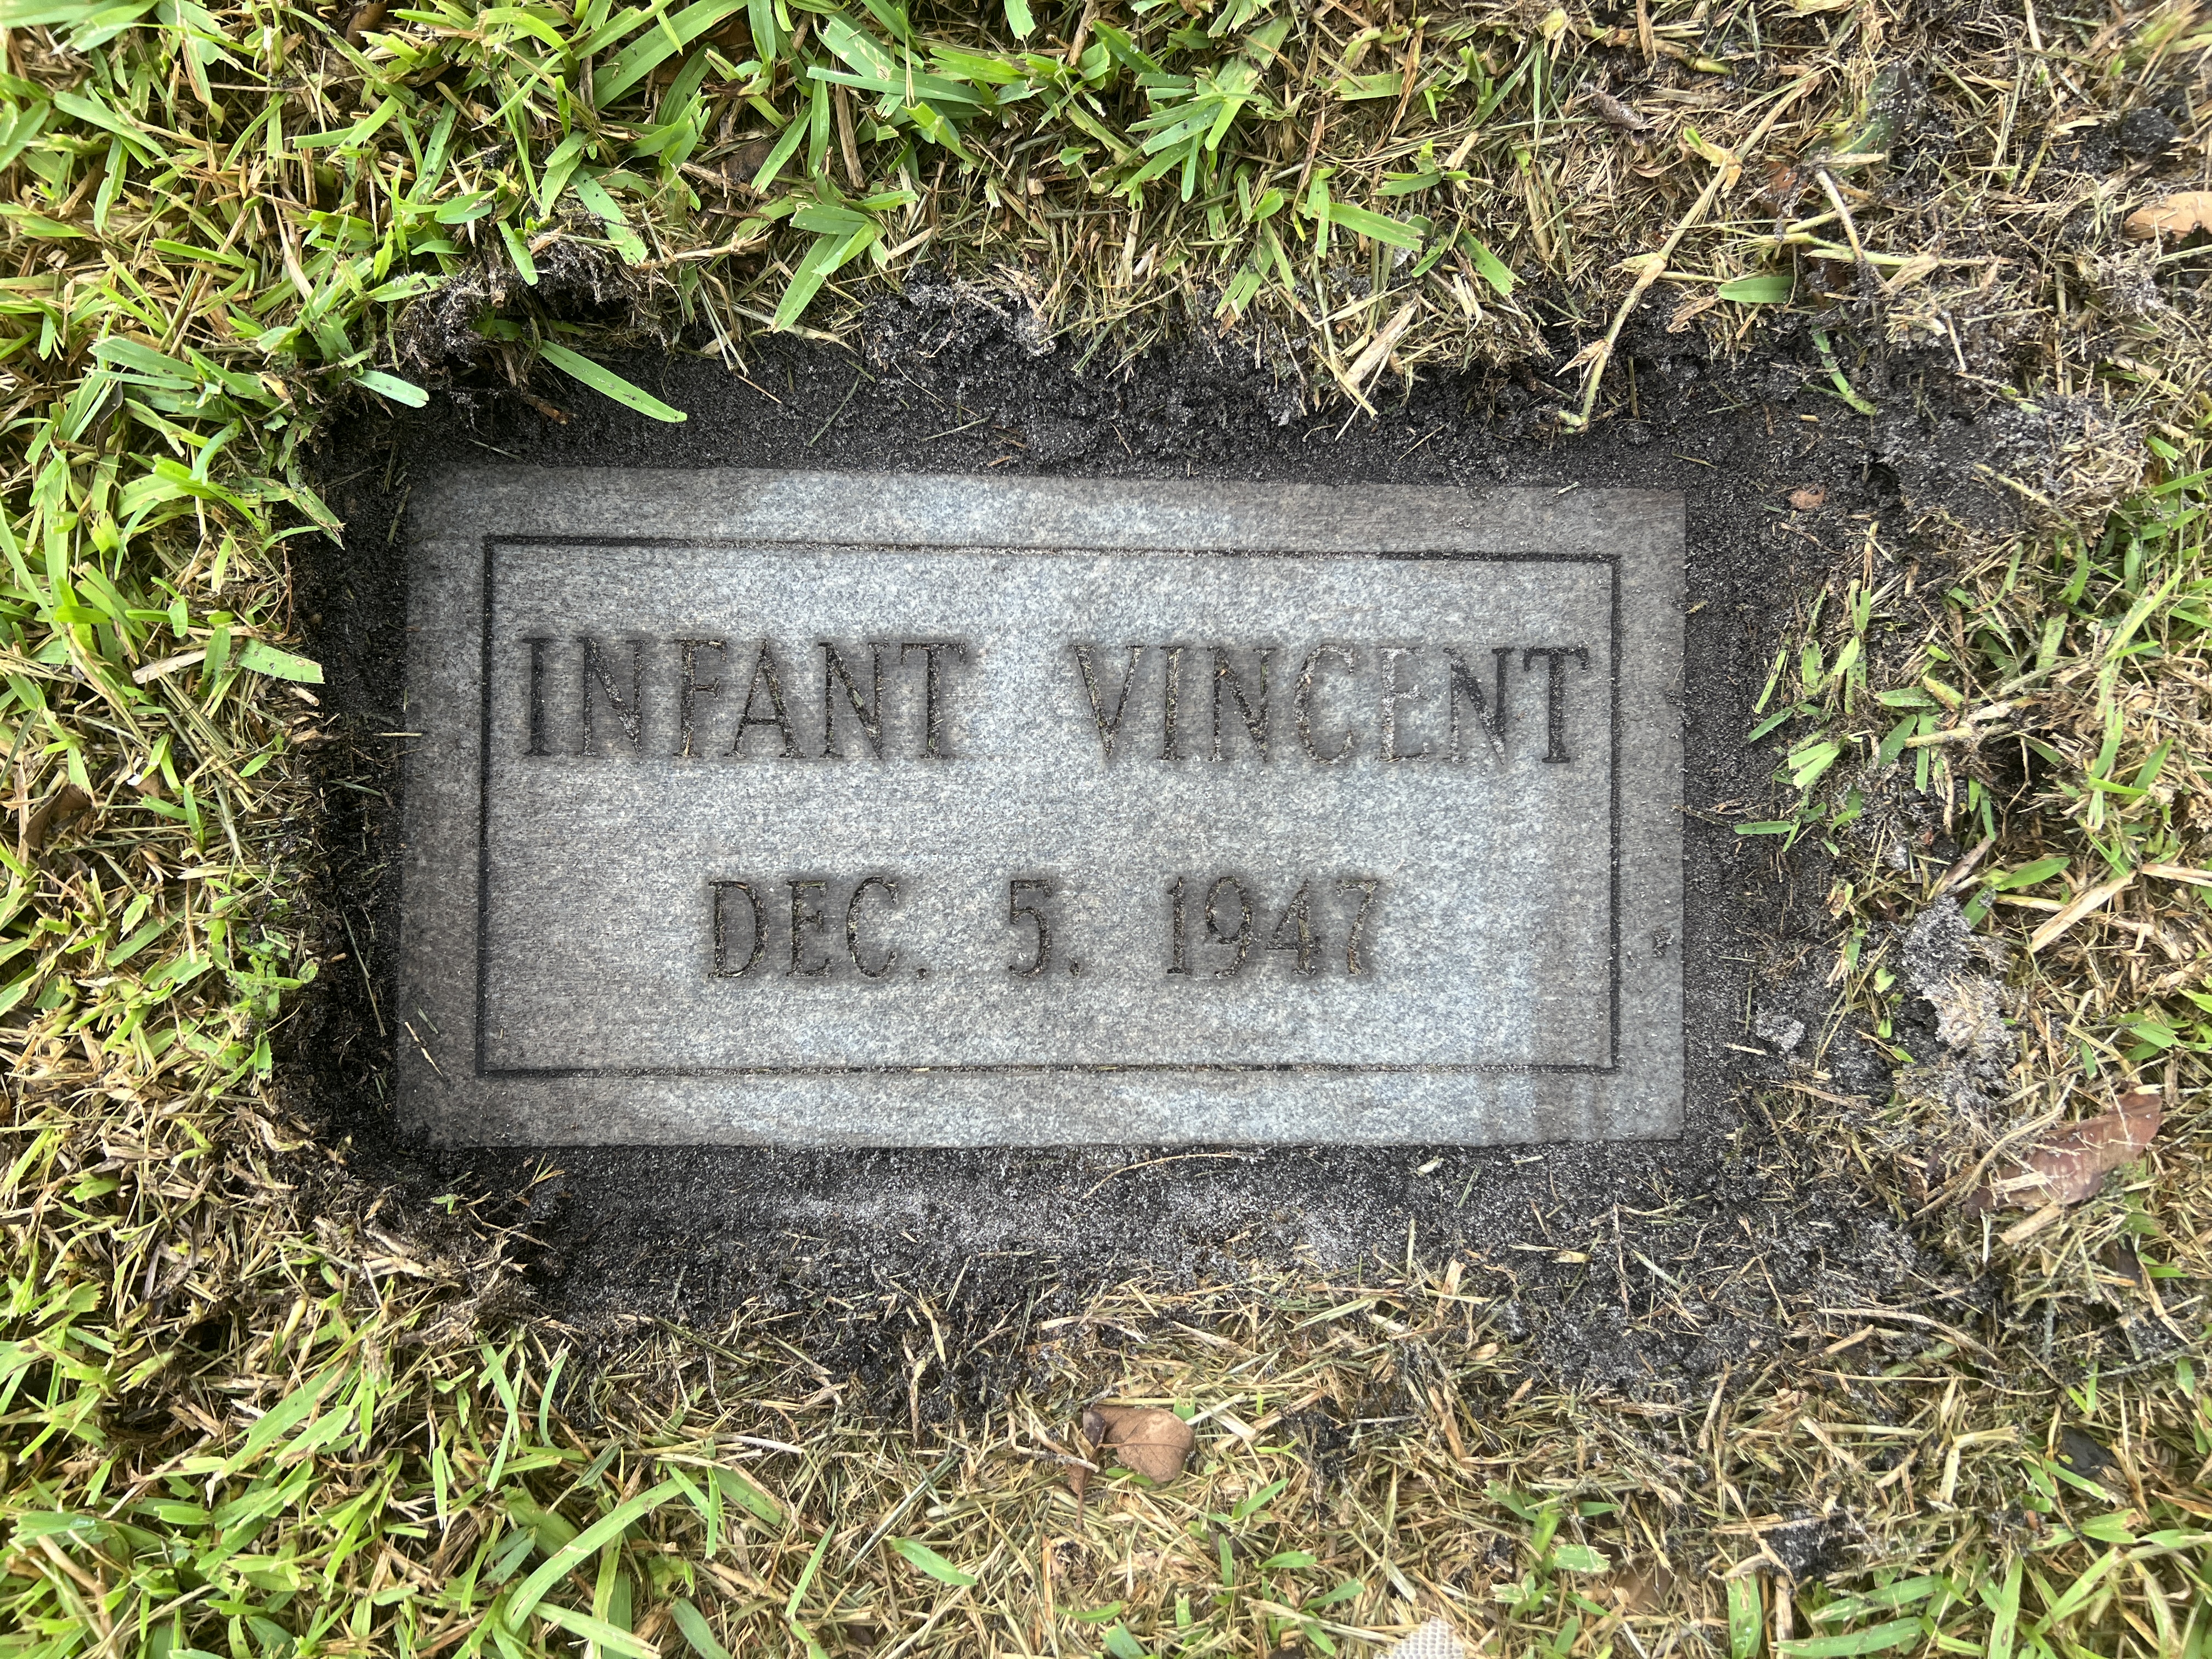 Infant Vincent